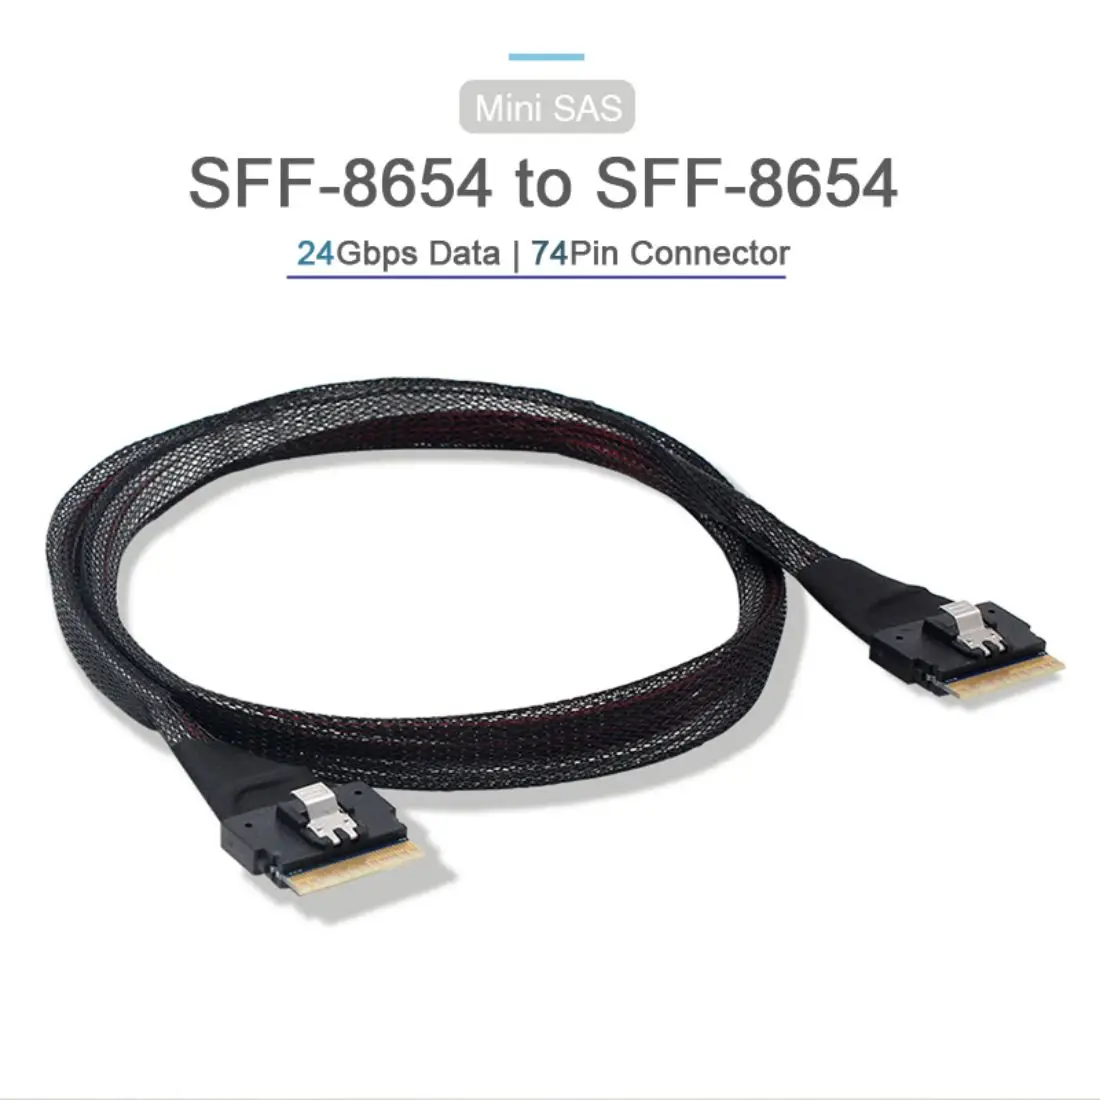 

CYSM ChenYang SFF-8654 8i 74pin Host Male to SFF-8654 74Pin Male PCI-E Slimline SAS 4.0 Target Cable 50cm